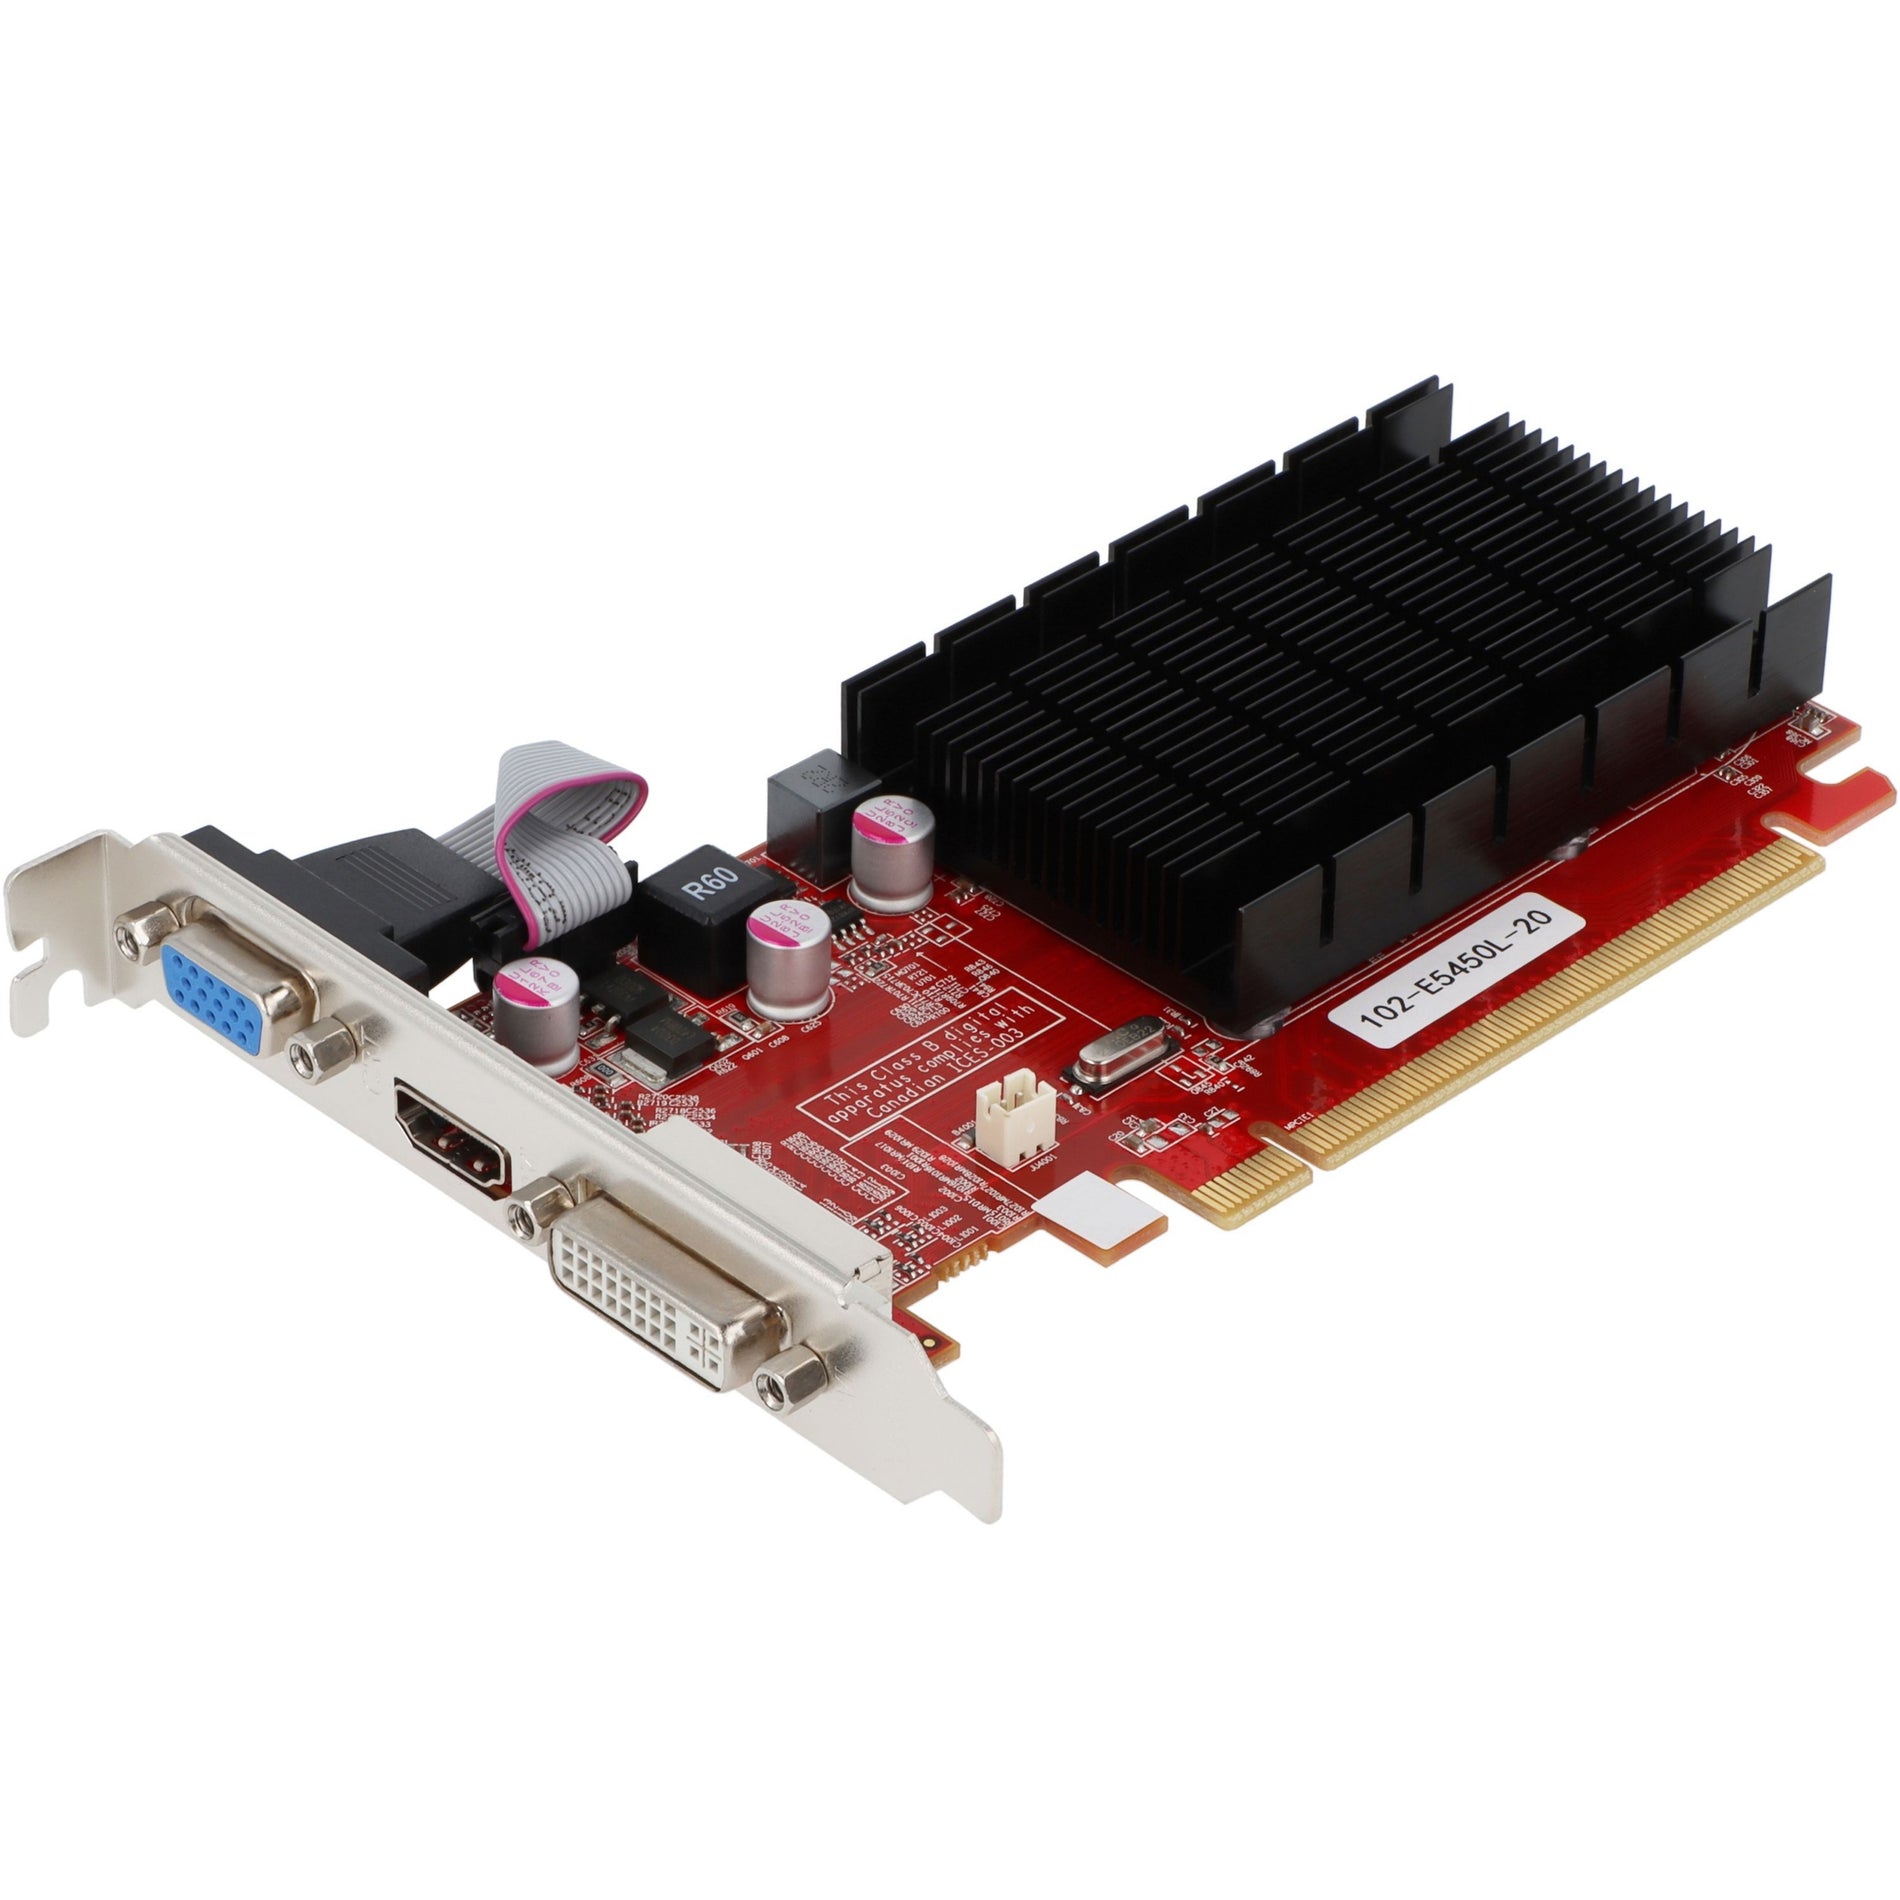 VisionTek 900860 AMD Radeon 5450 Graphic Card, 1GB DDR3, DVI-I, HDMI, VGA